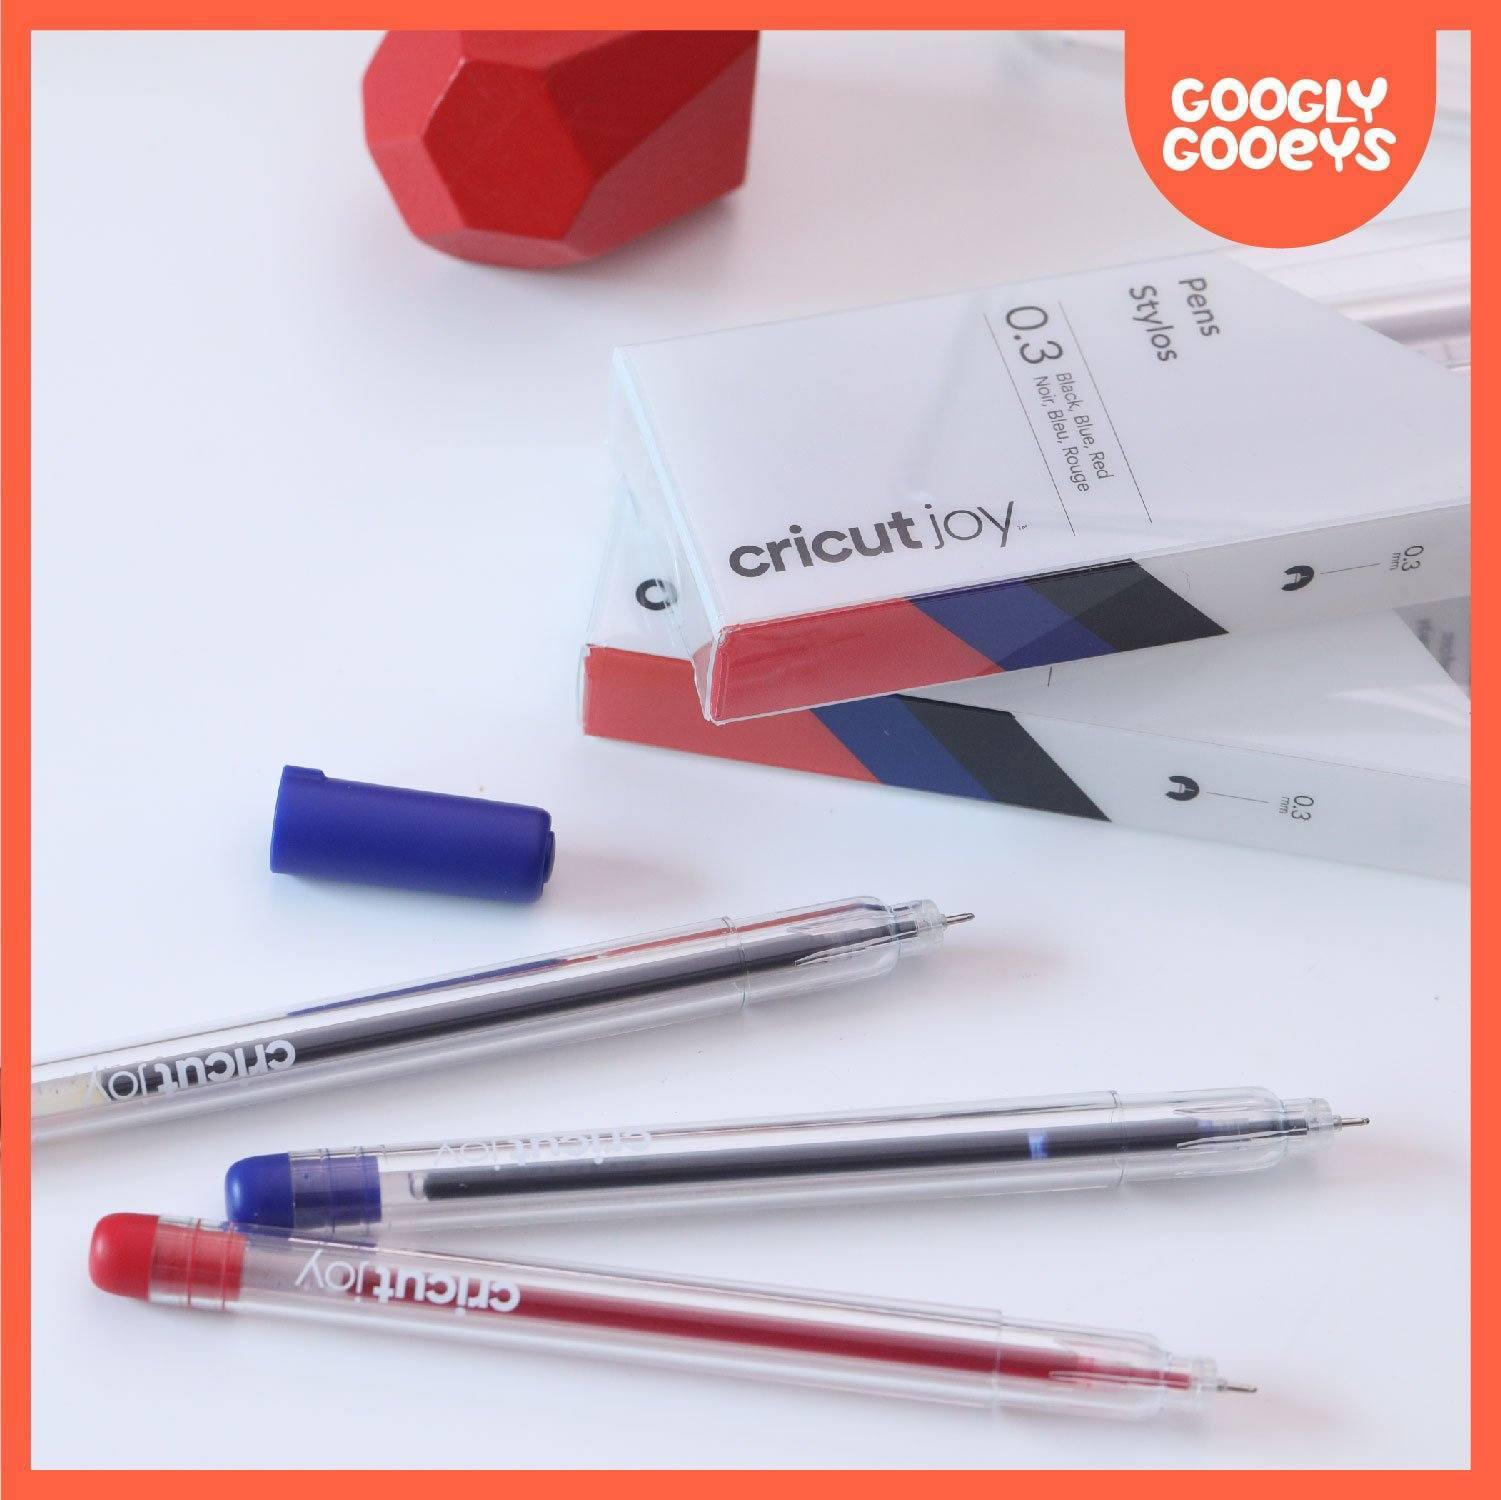 Cricut Joy Extra Fine Point Pens, 0.3 mm (3 ct) | Black, Red, Blue-Cricut Joy Accessories-[Product vendor]-GooglyGooeys-DIY-Crafts-Philippines